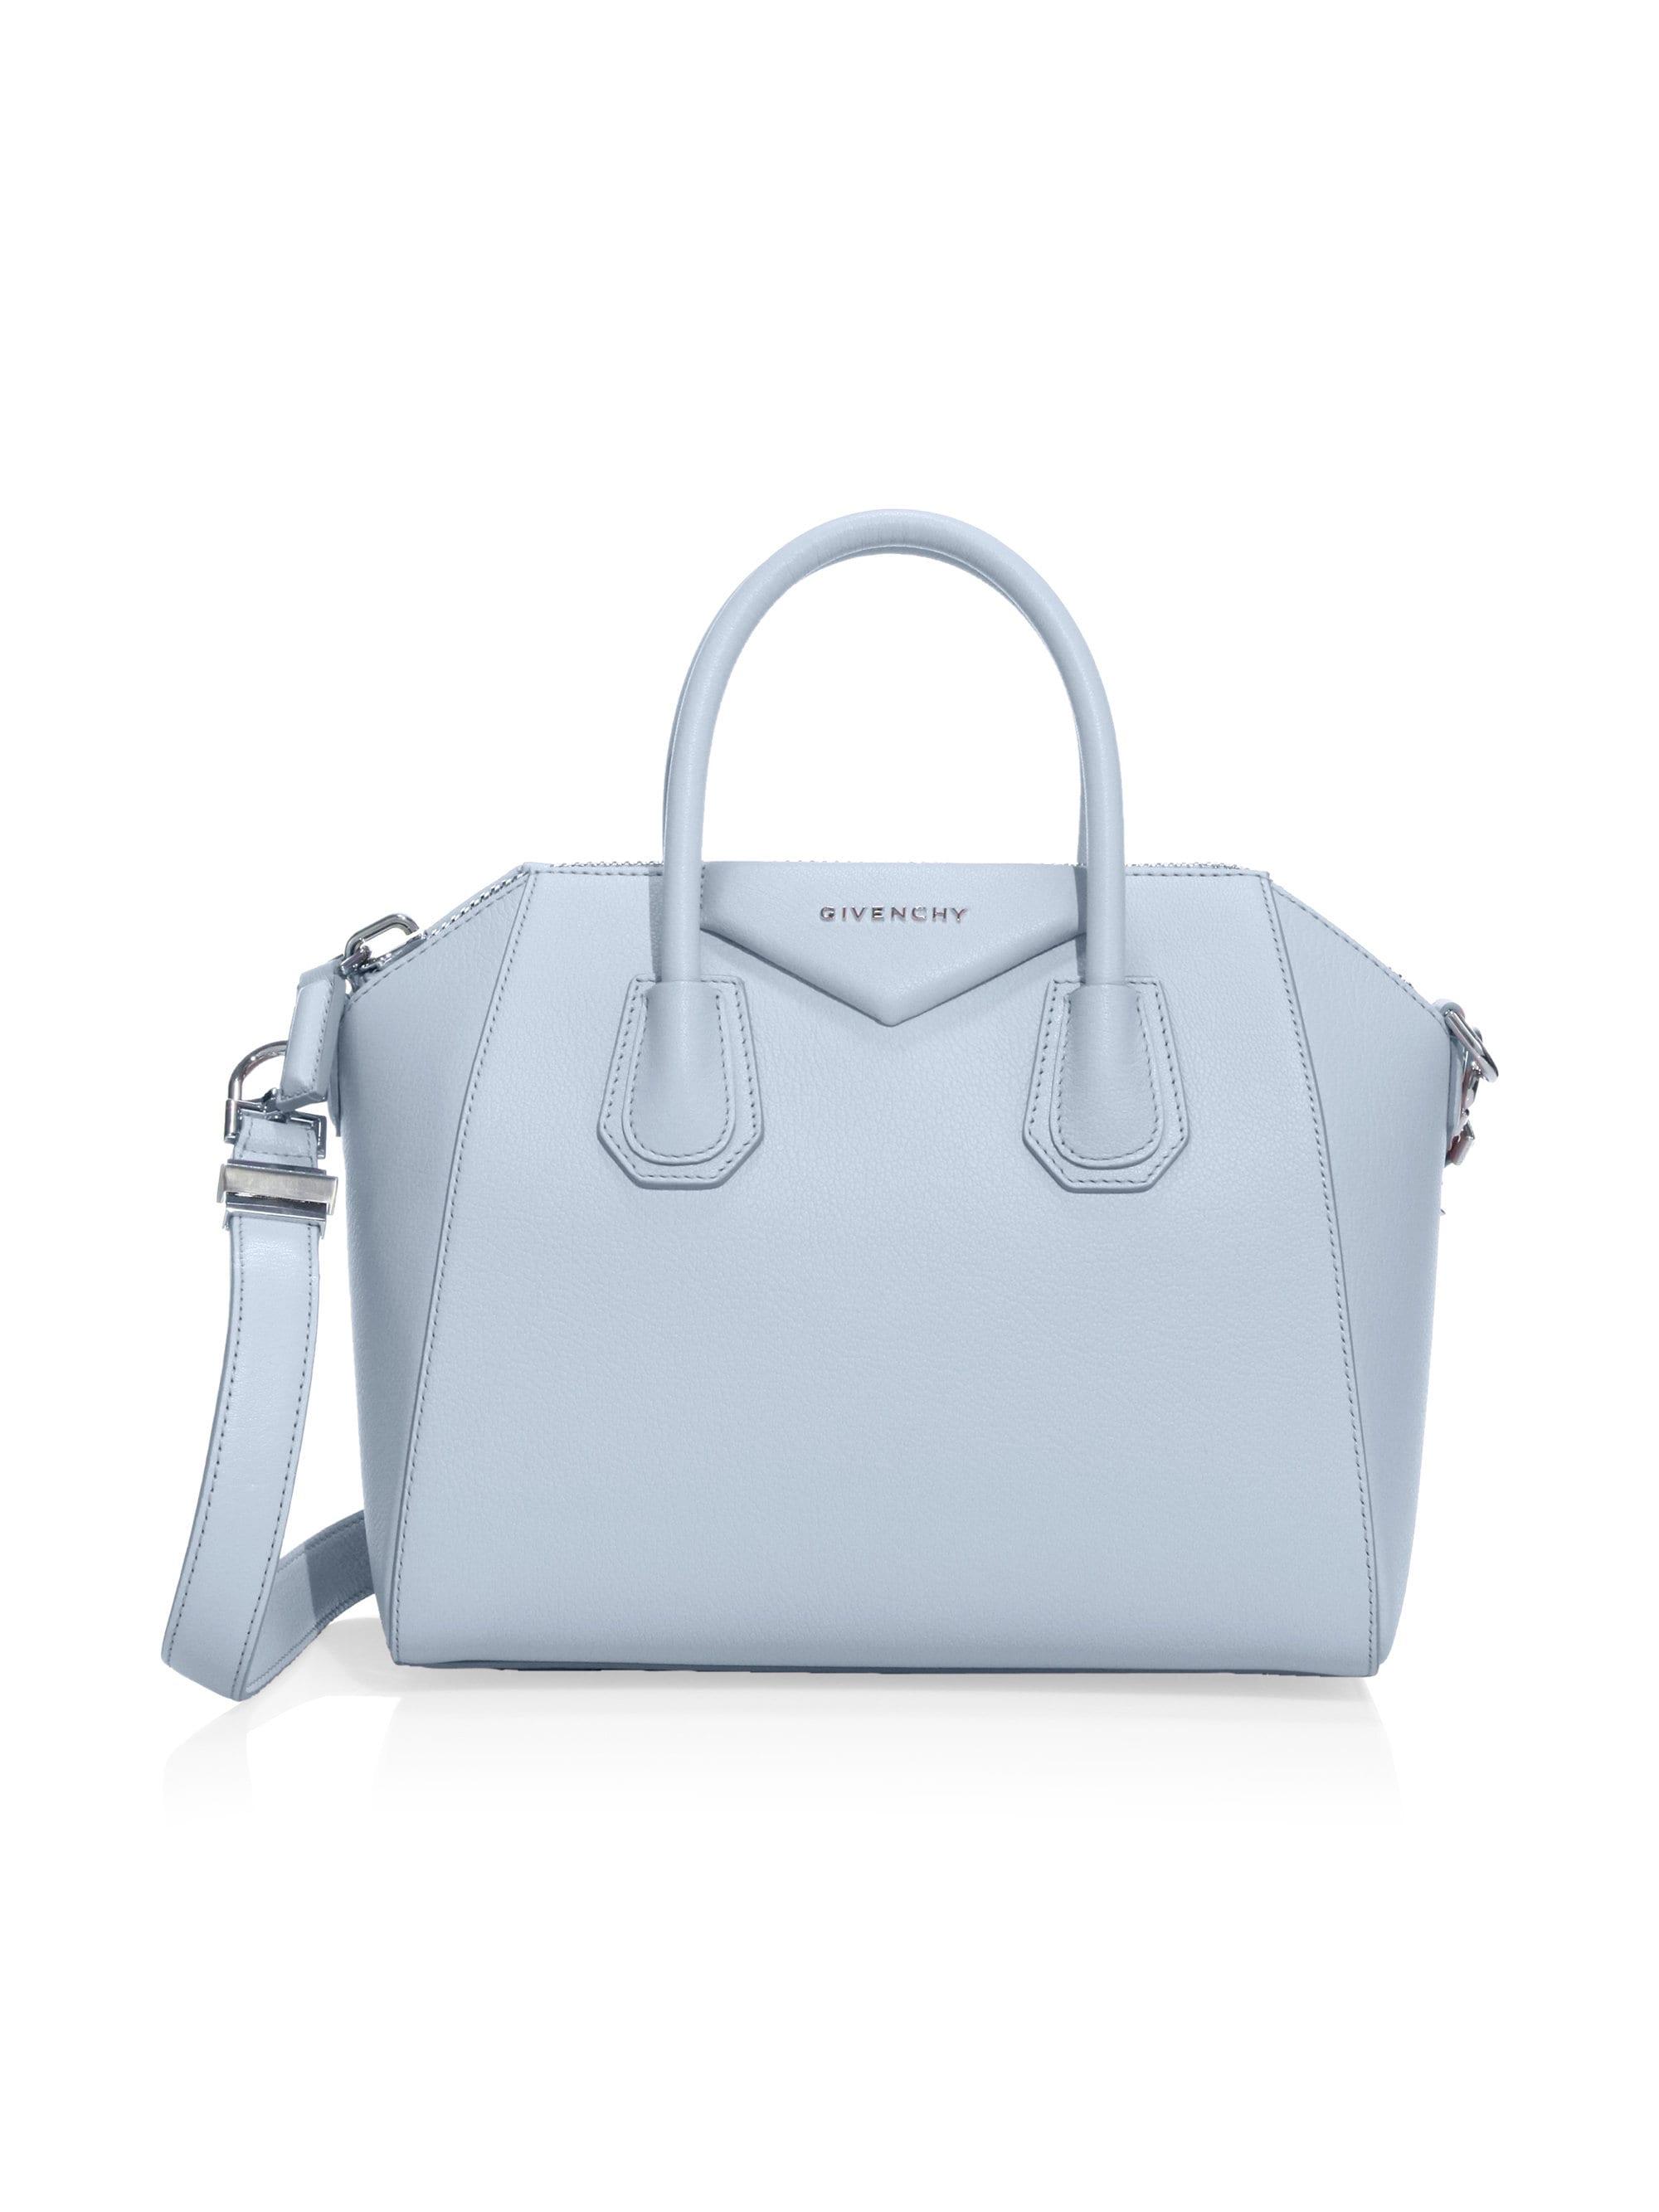 Mini Antigona Sport Bag in Baby Blue FWRD Accessories Bags Sports Bags 